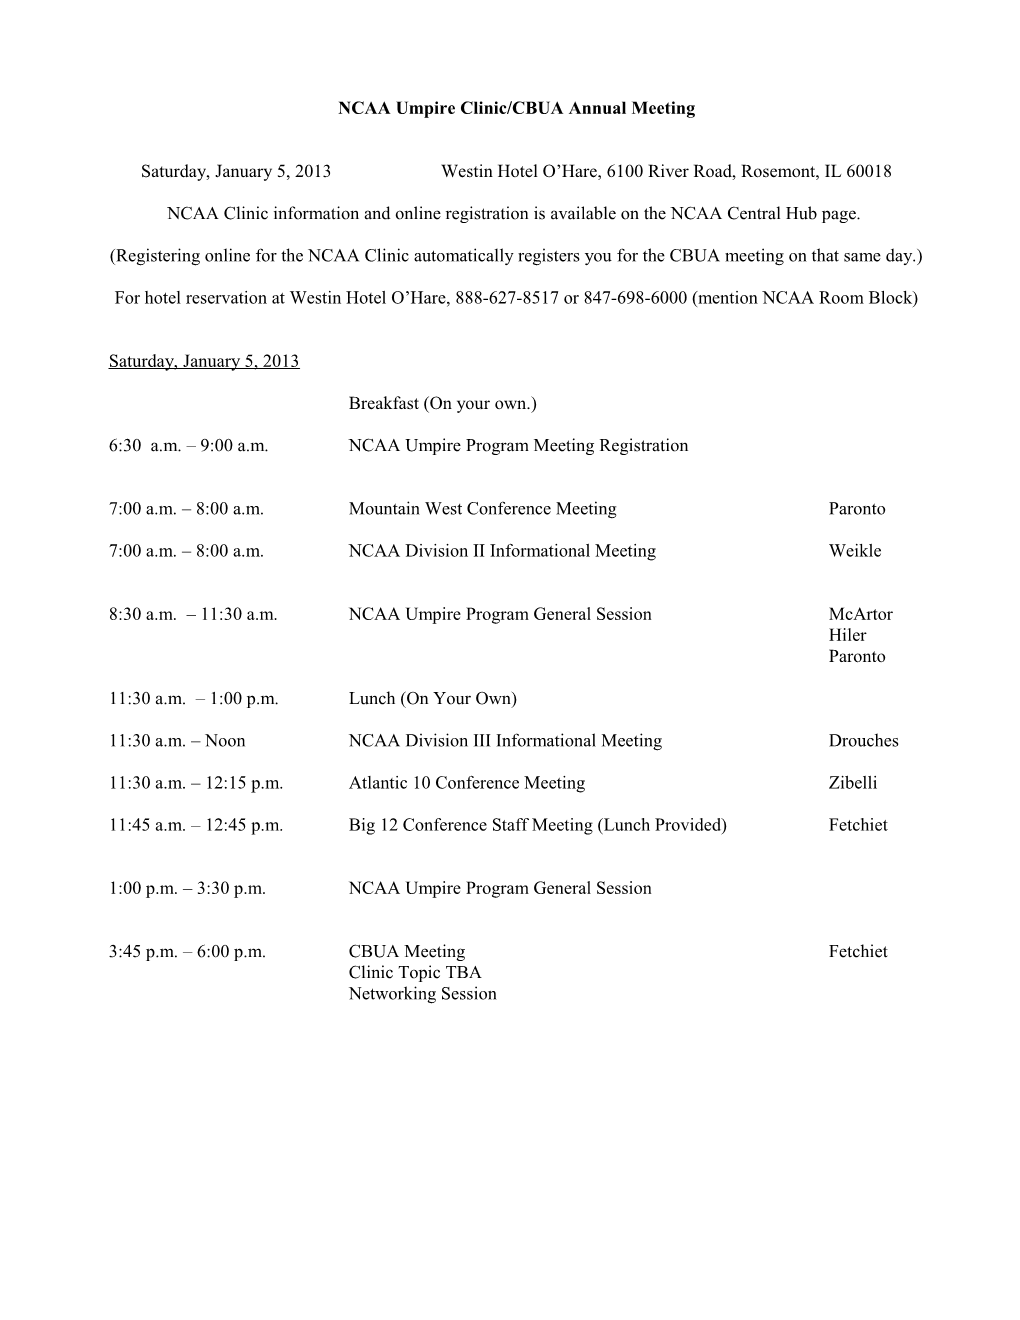 NCAA National Umpire Program Meeting/CBUA Annual Meeting